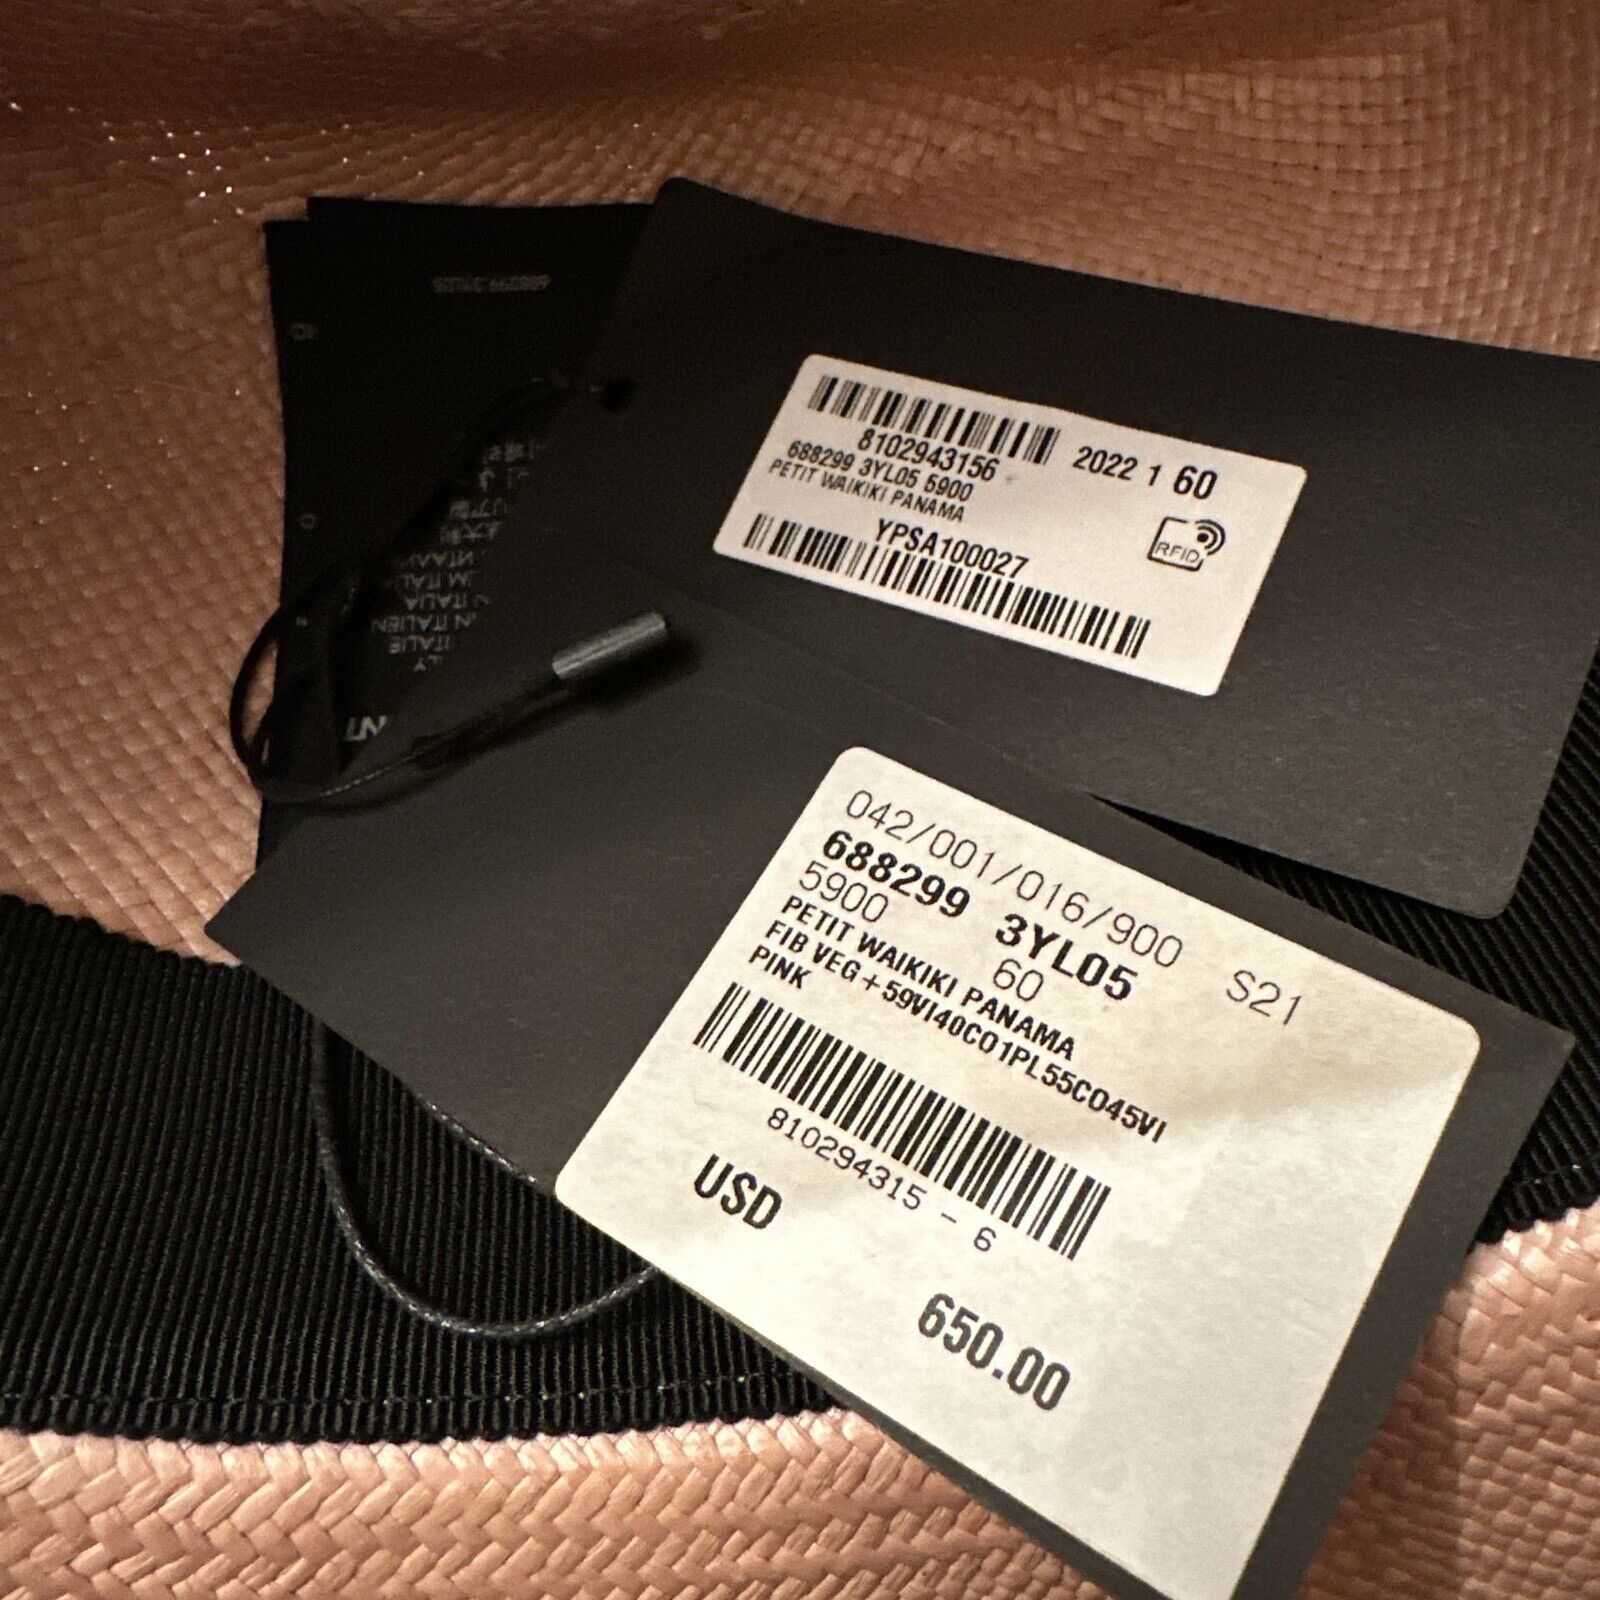 NWT $650 Saint Laurent Men Straw Fedora Hat Pink Size XL ( 60 ) Italy